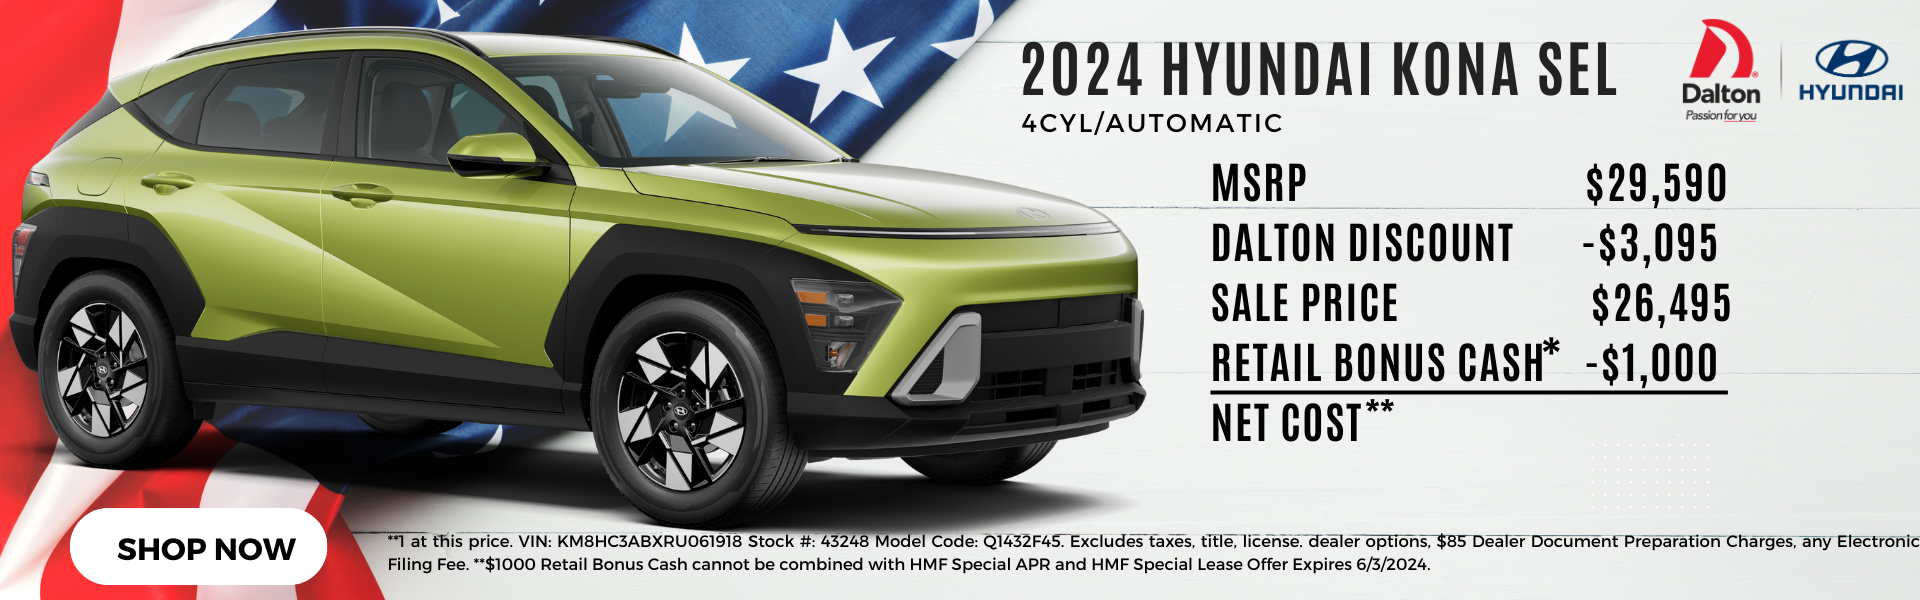 2024 Hyundai Kona SEL Ad